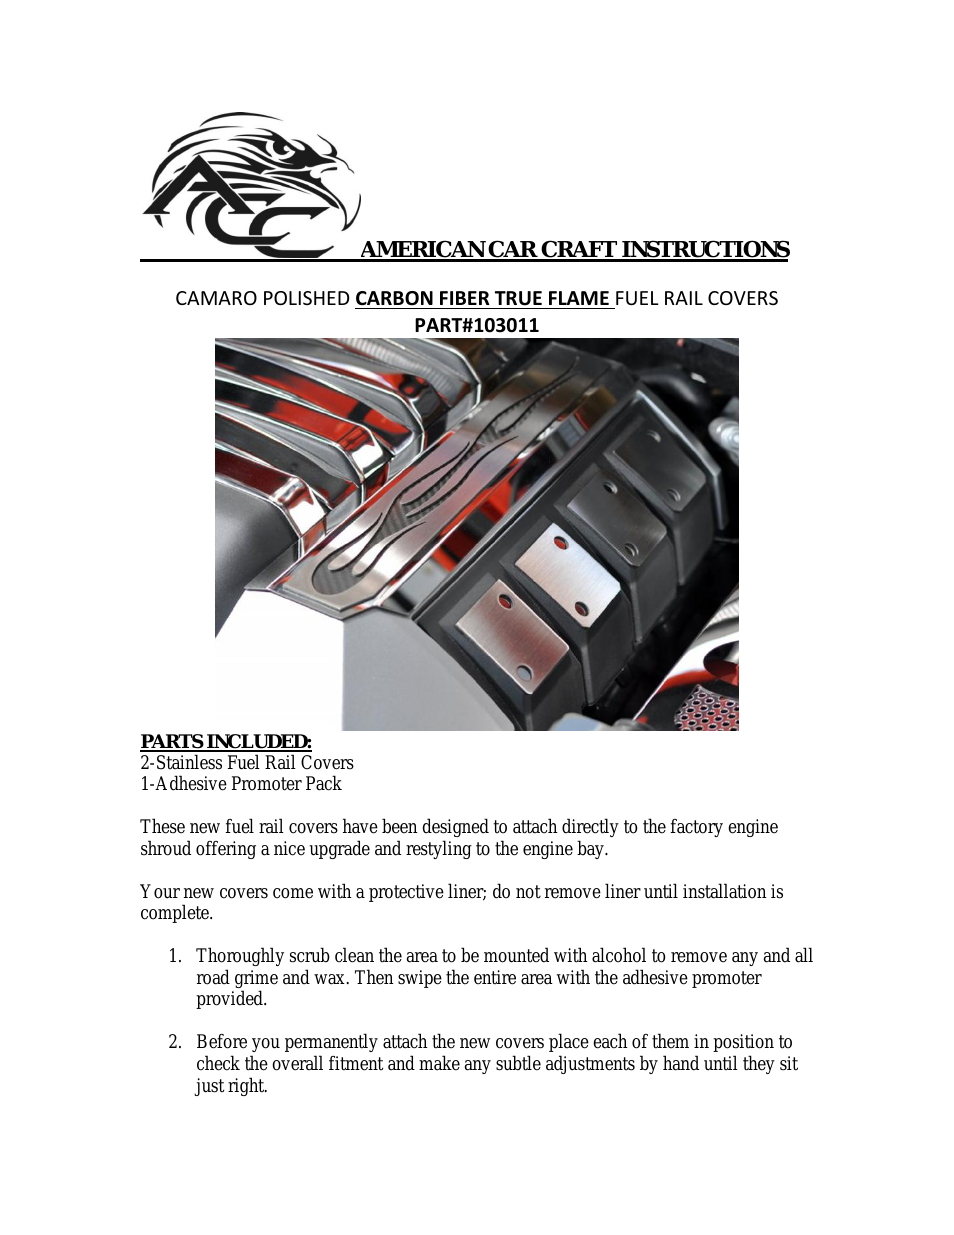 Camaro Fuel Rail Covers Polished Carbon Fiber "True Flame 2010-2013"